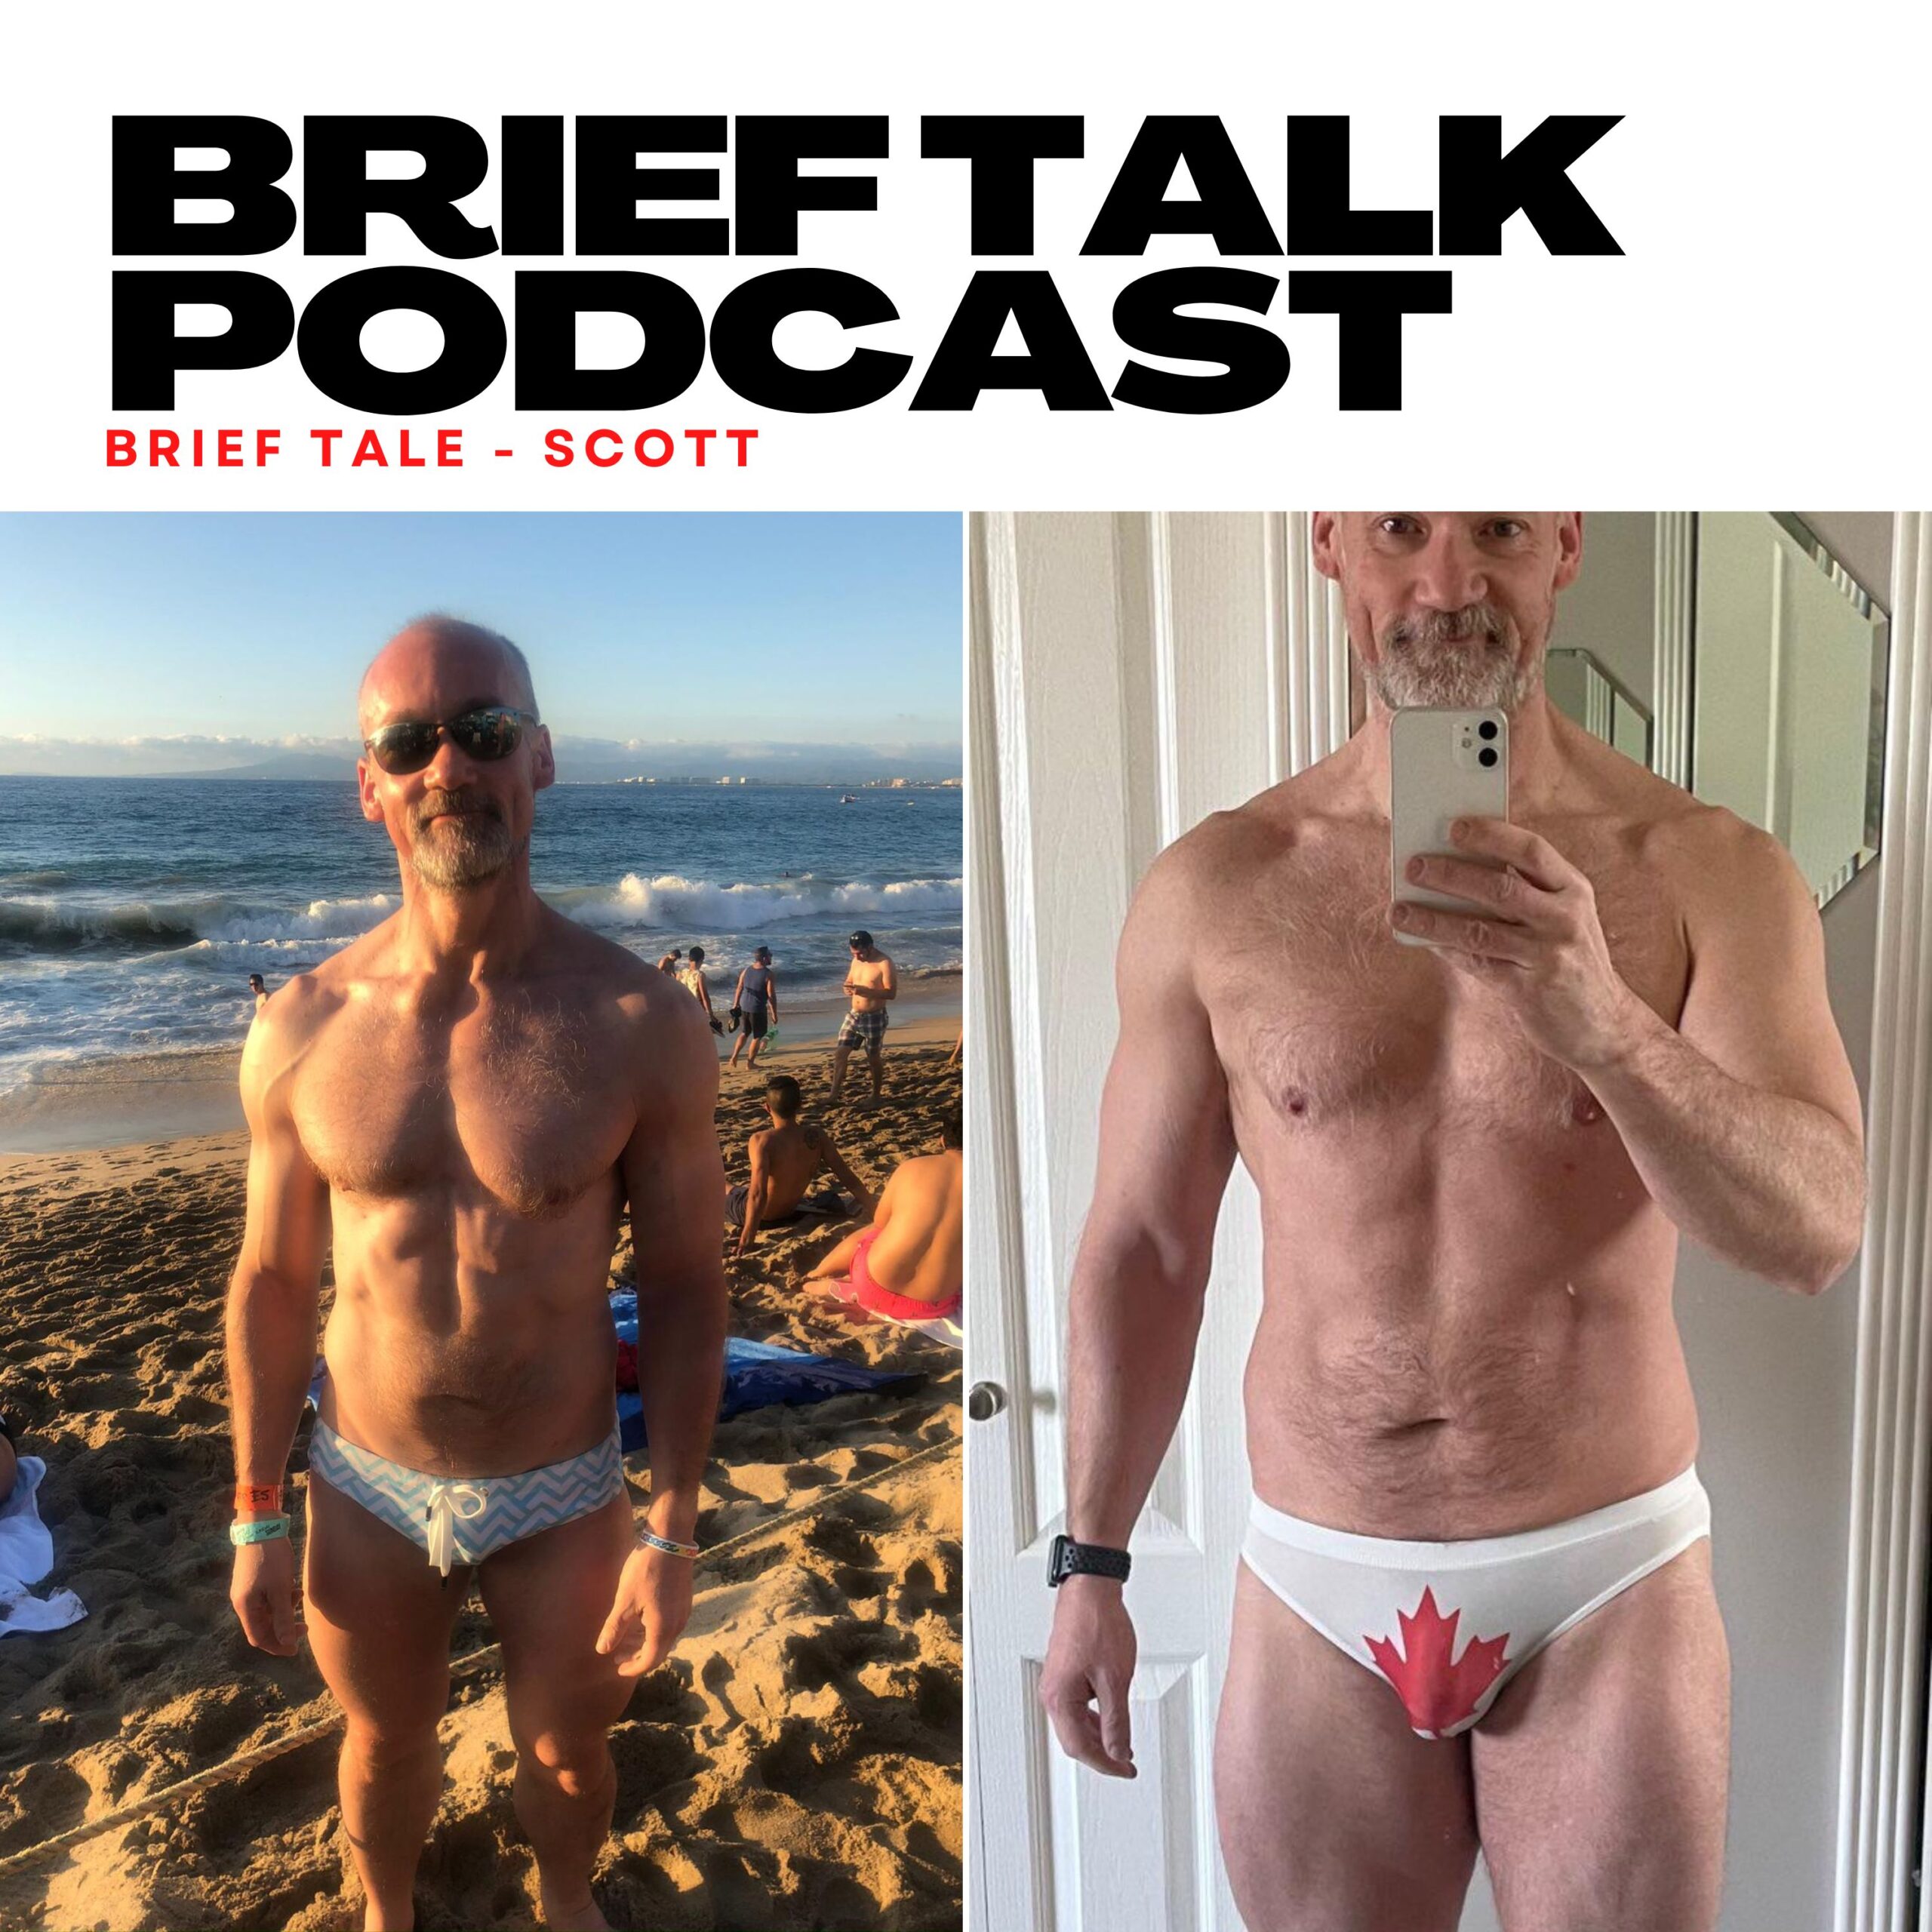 Brief Talk Podcast – Brief Tale – Scott